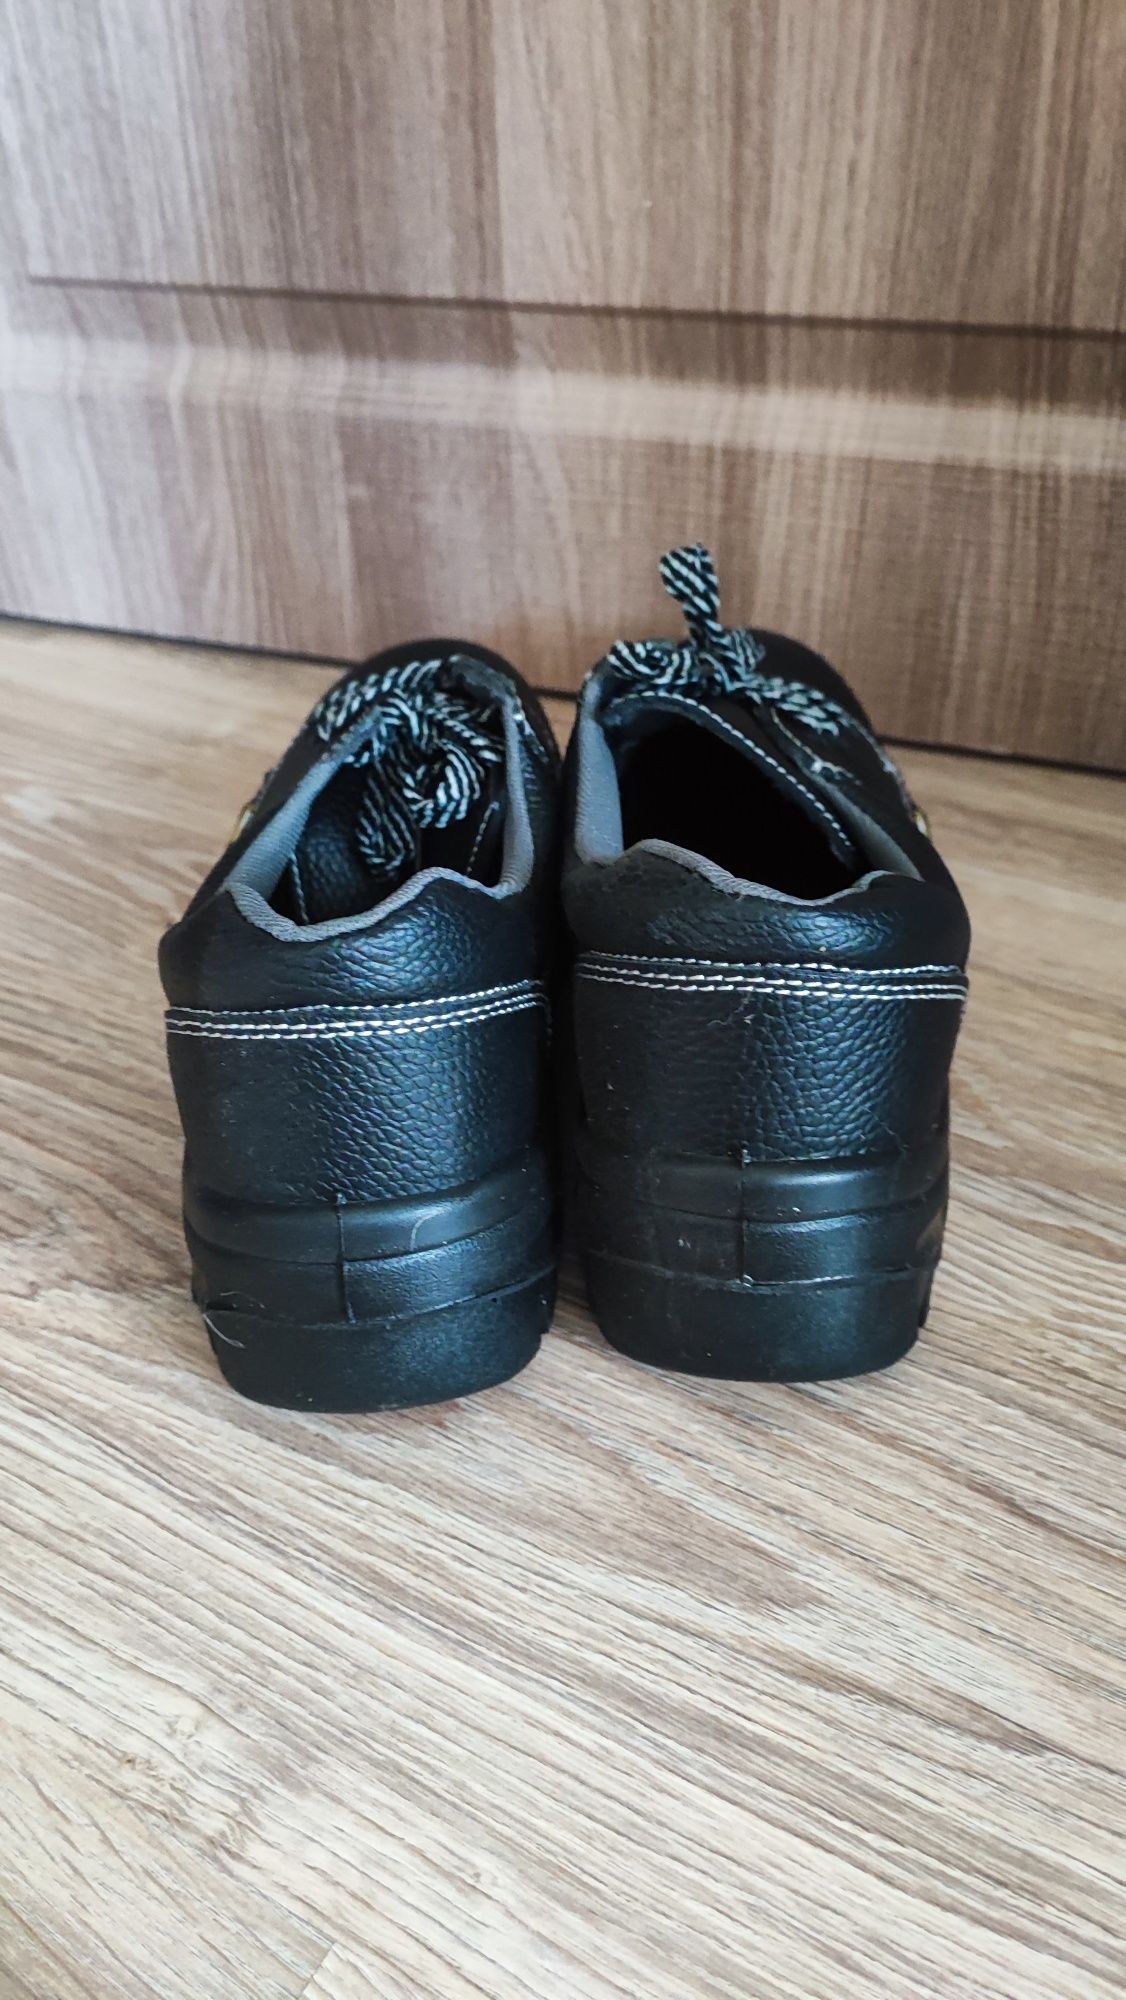 Мъжки обувки Safety shoes 44 номер